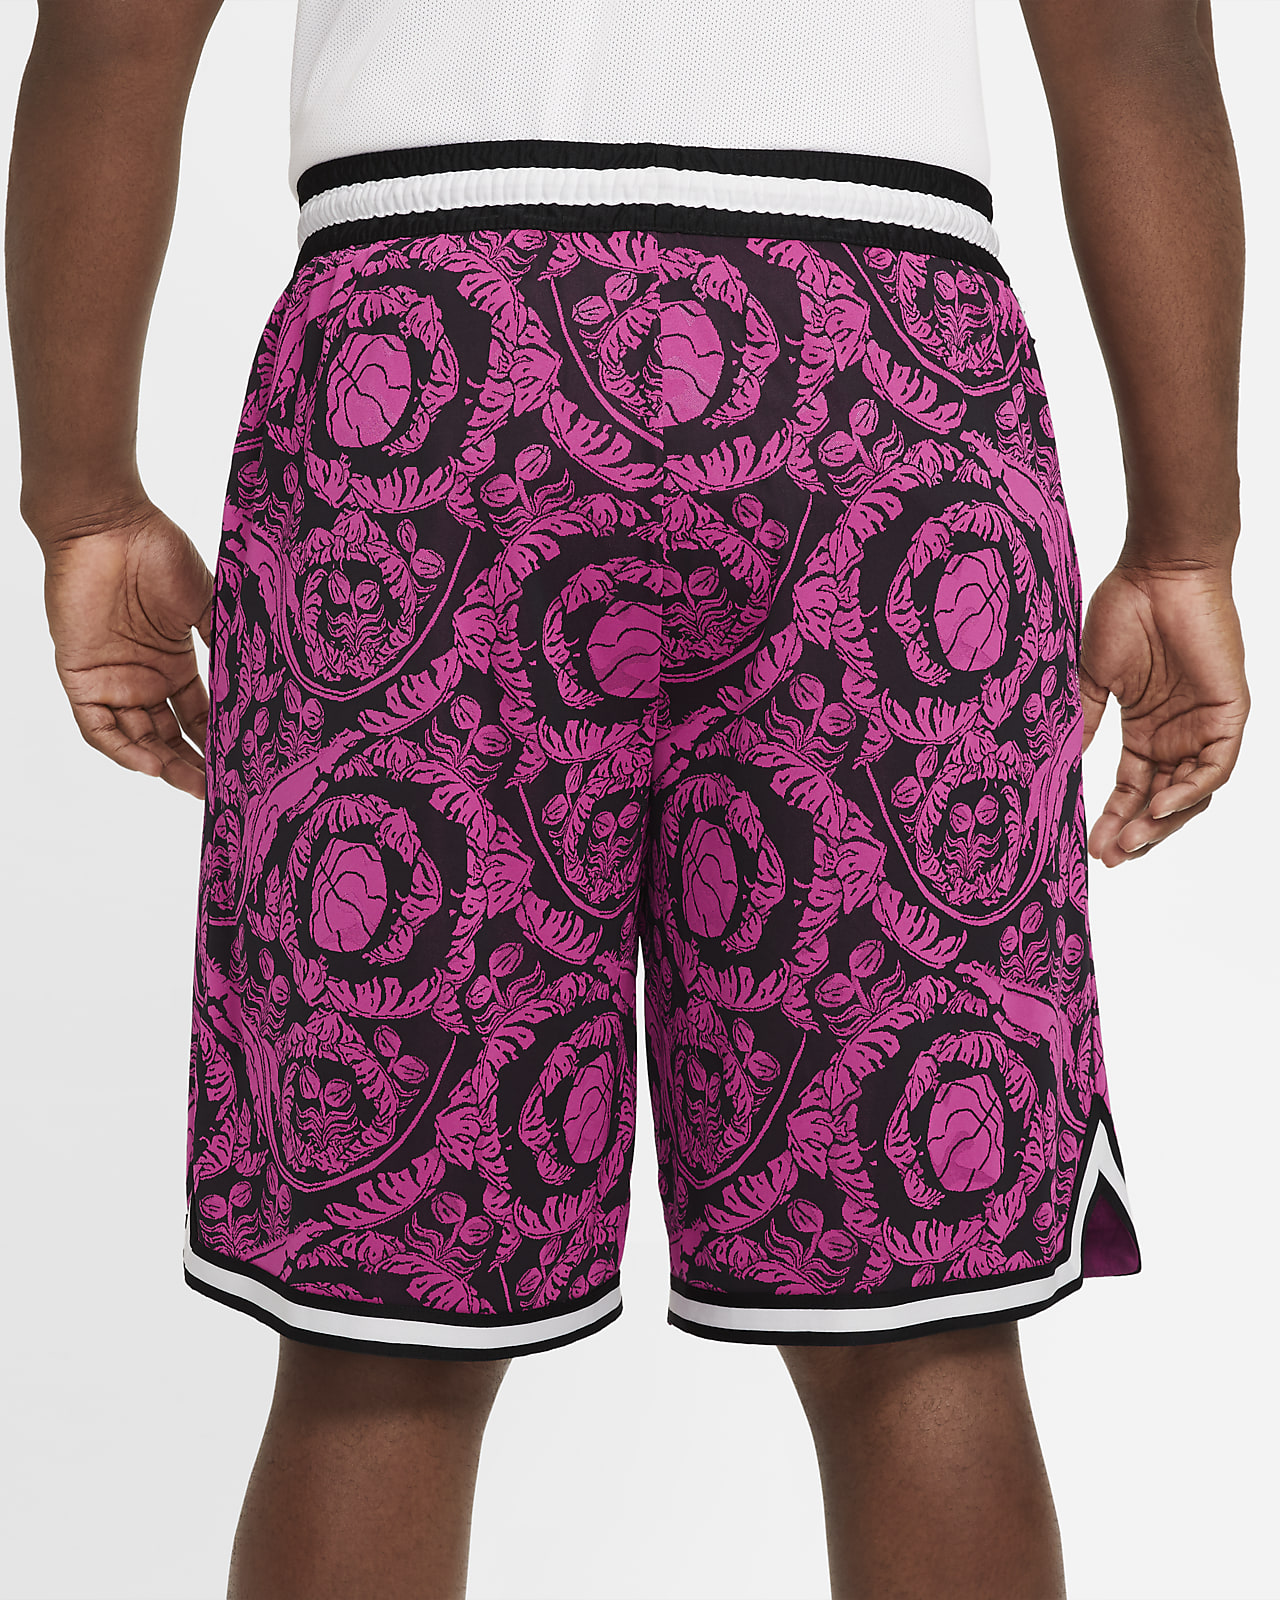 nike purple basketball shorts